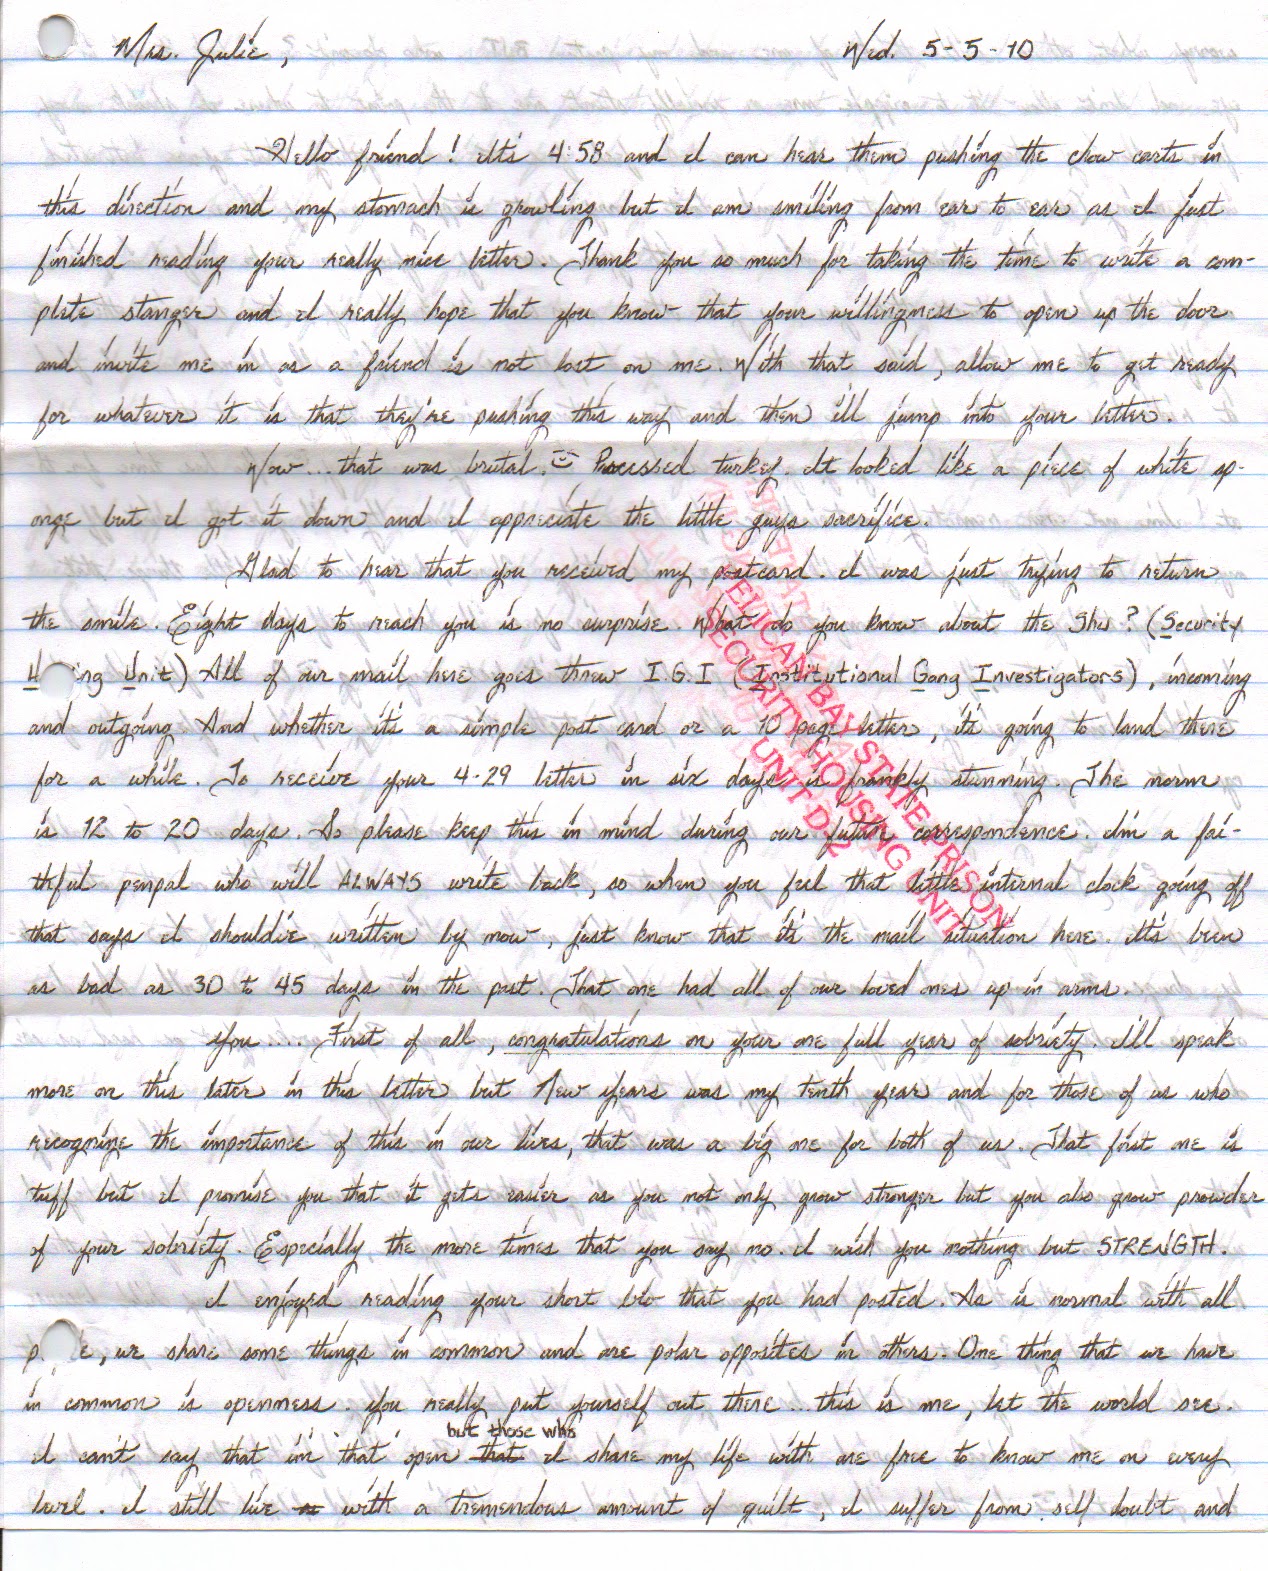 Sample parole packet cover letter